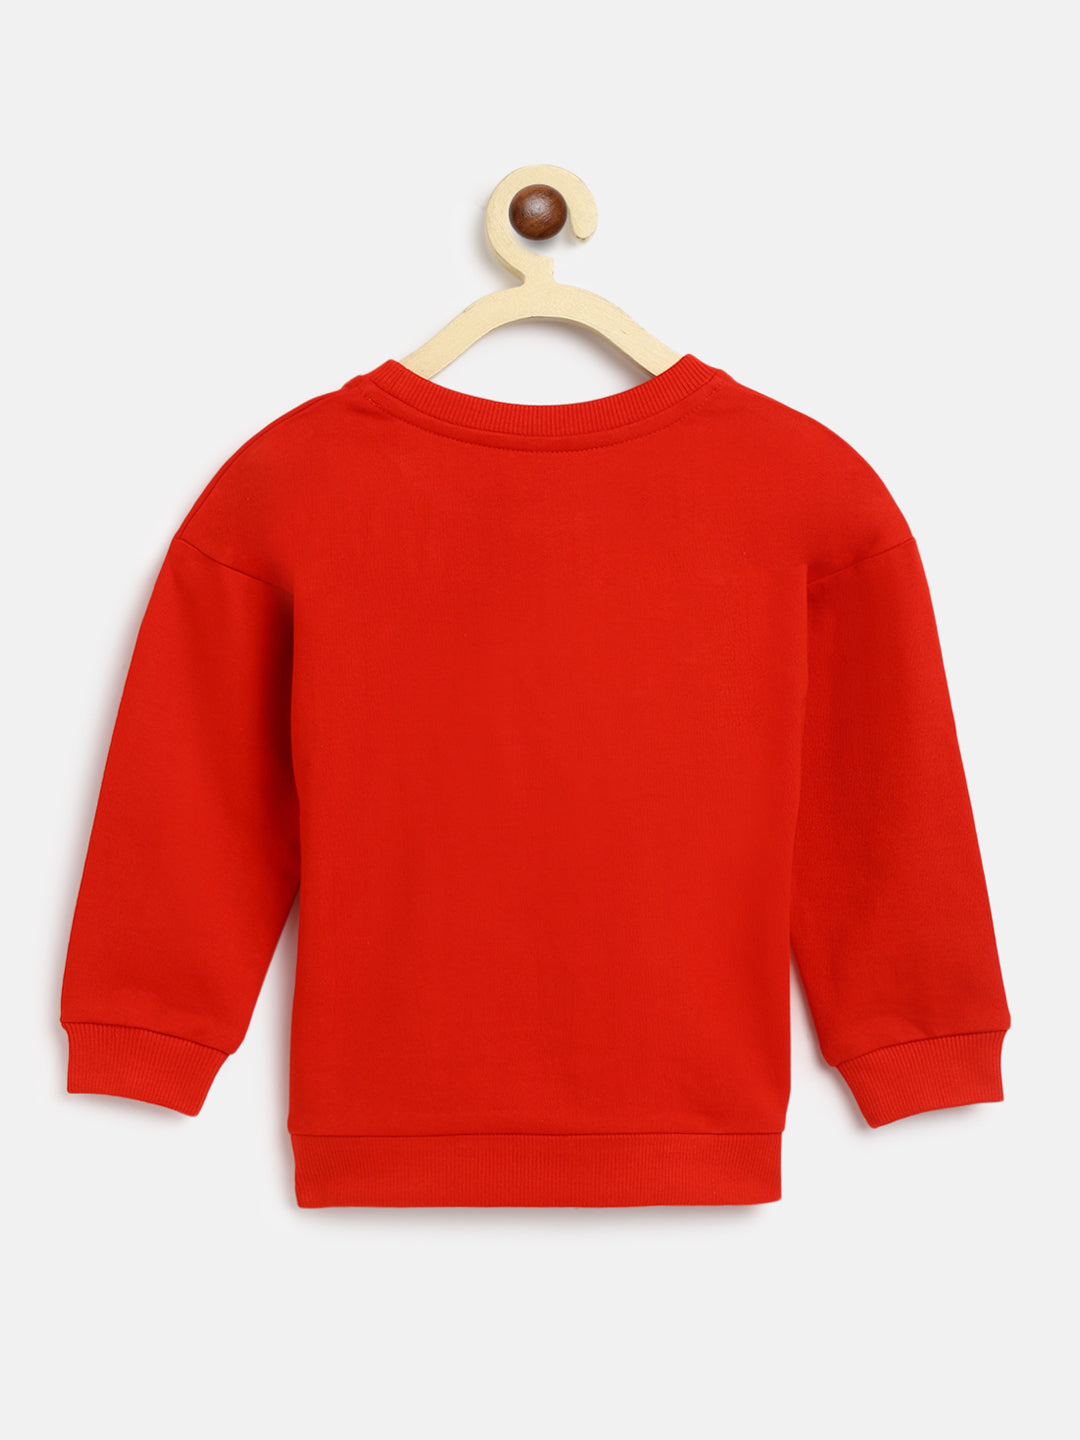 Nautinati Boys Red Printed Sweatshirt